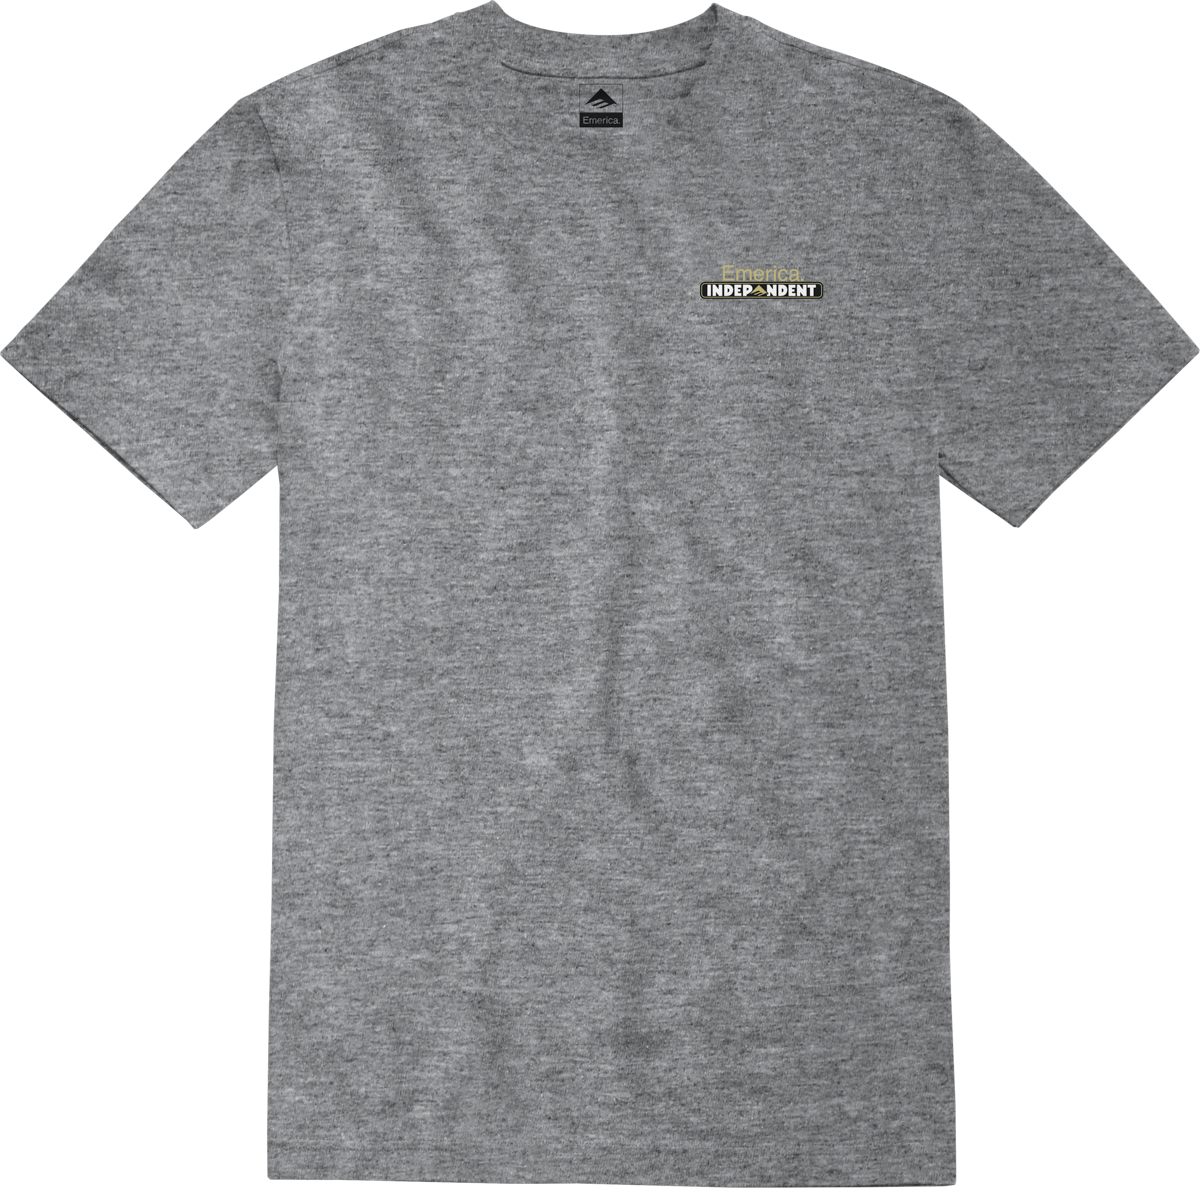 Emerica X Independent Bar Tee Mens Grey Heather T-Shirt